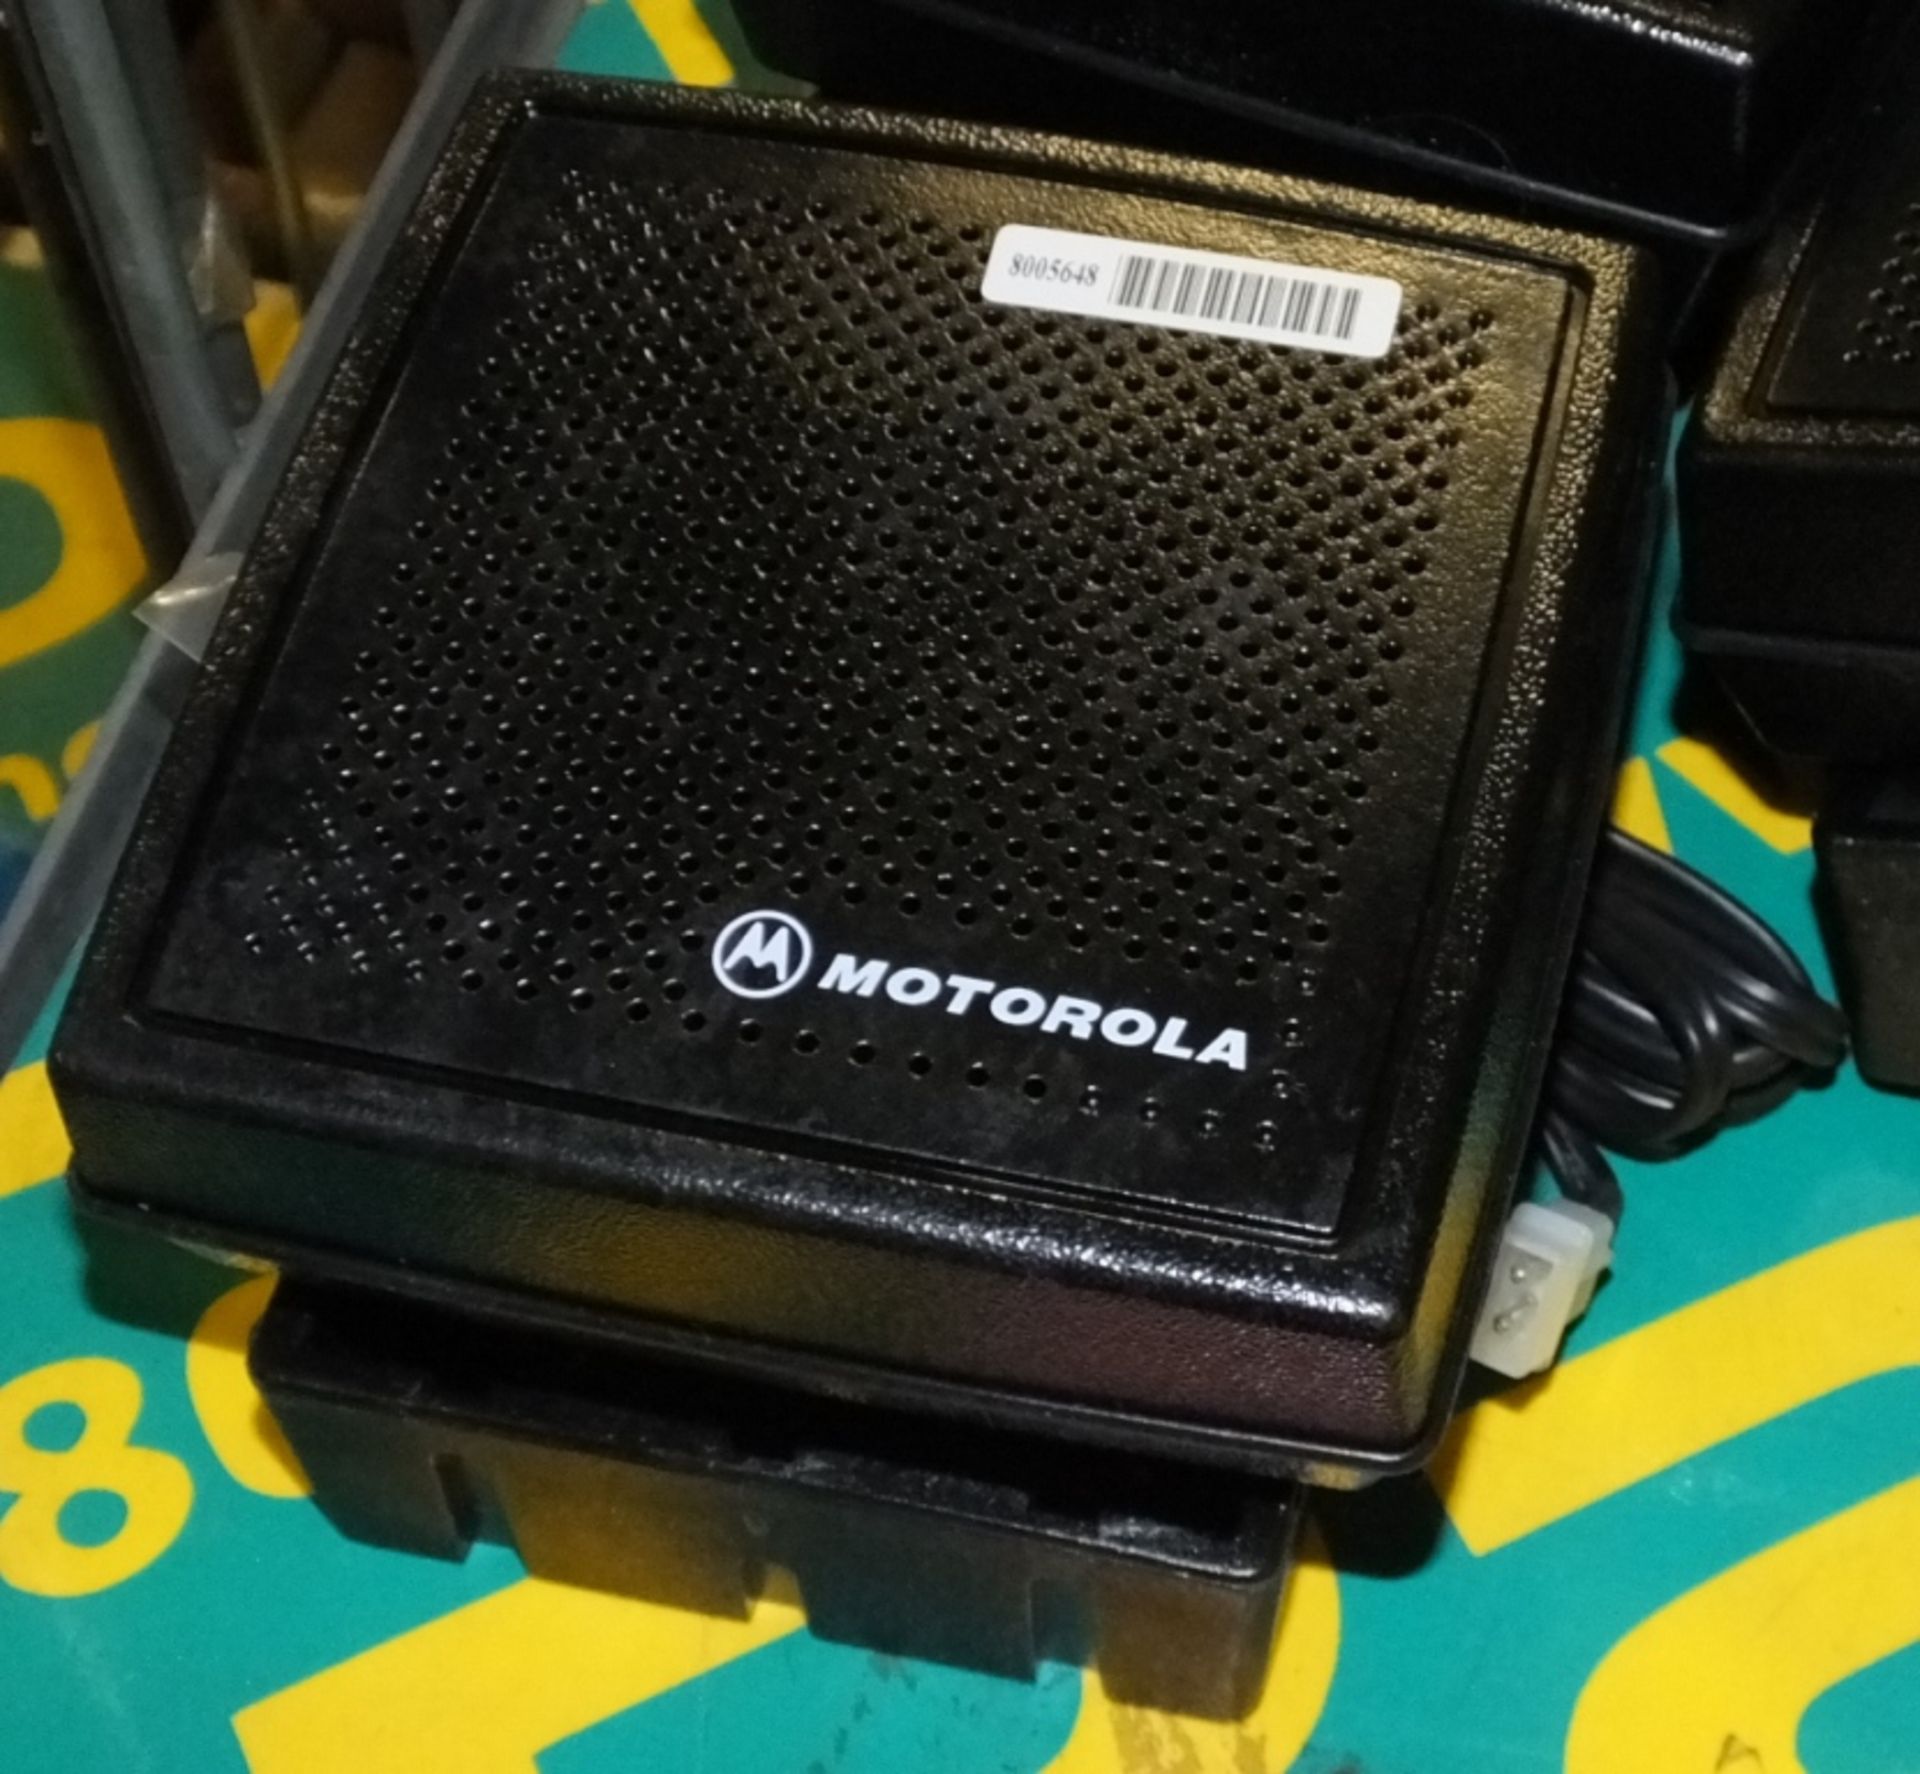 3x Motorola desktop speakers - Image 2 of 2